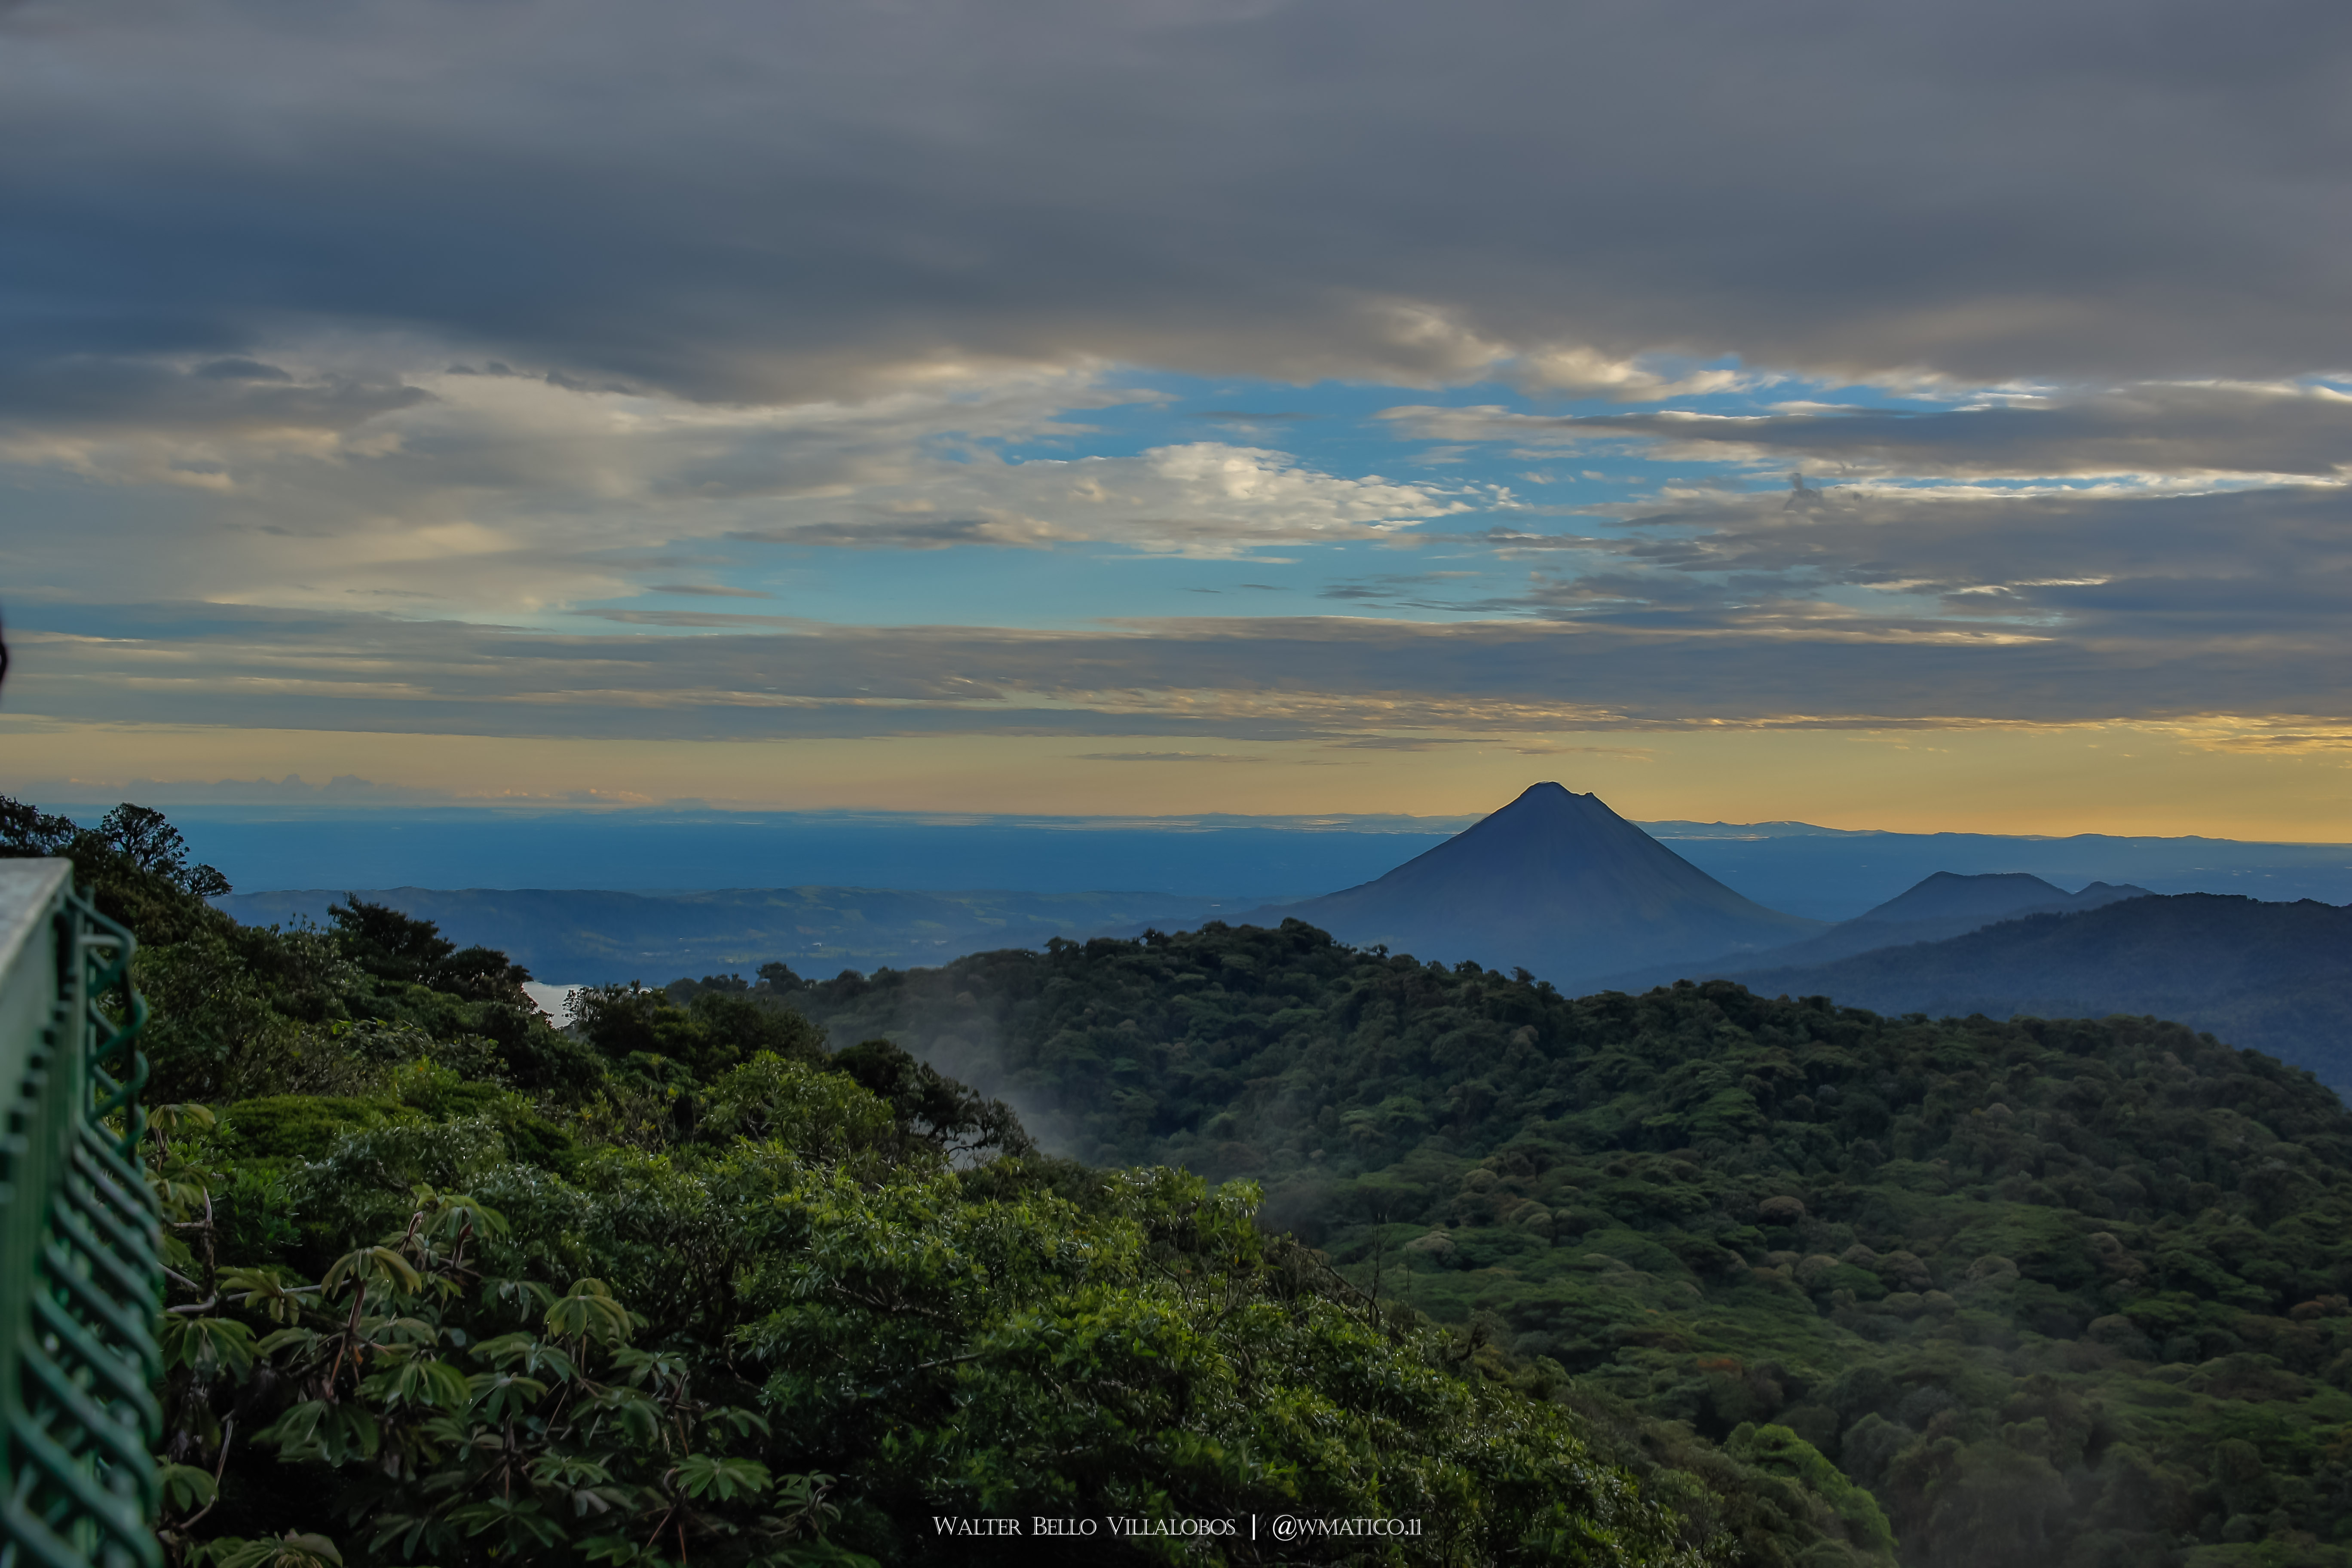 Developing a Virtual Tour for the Santa Elena Reserve